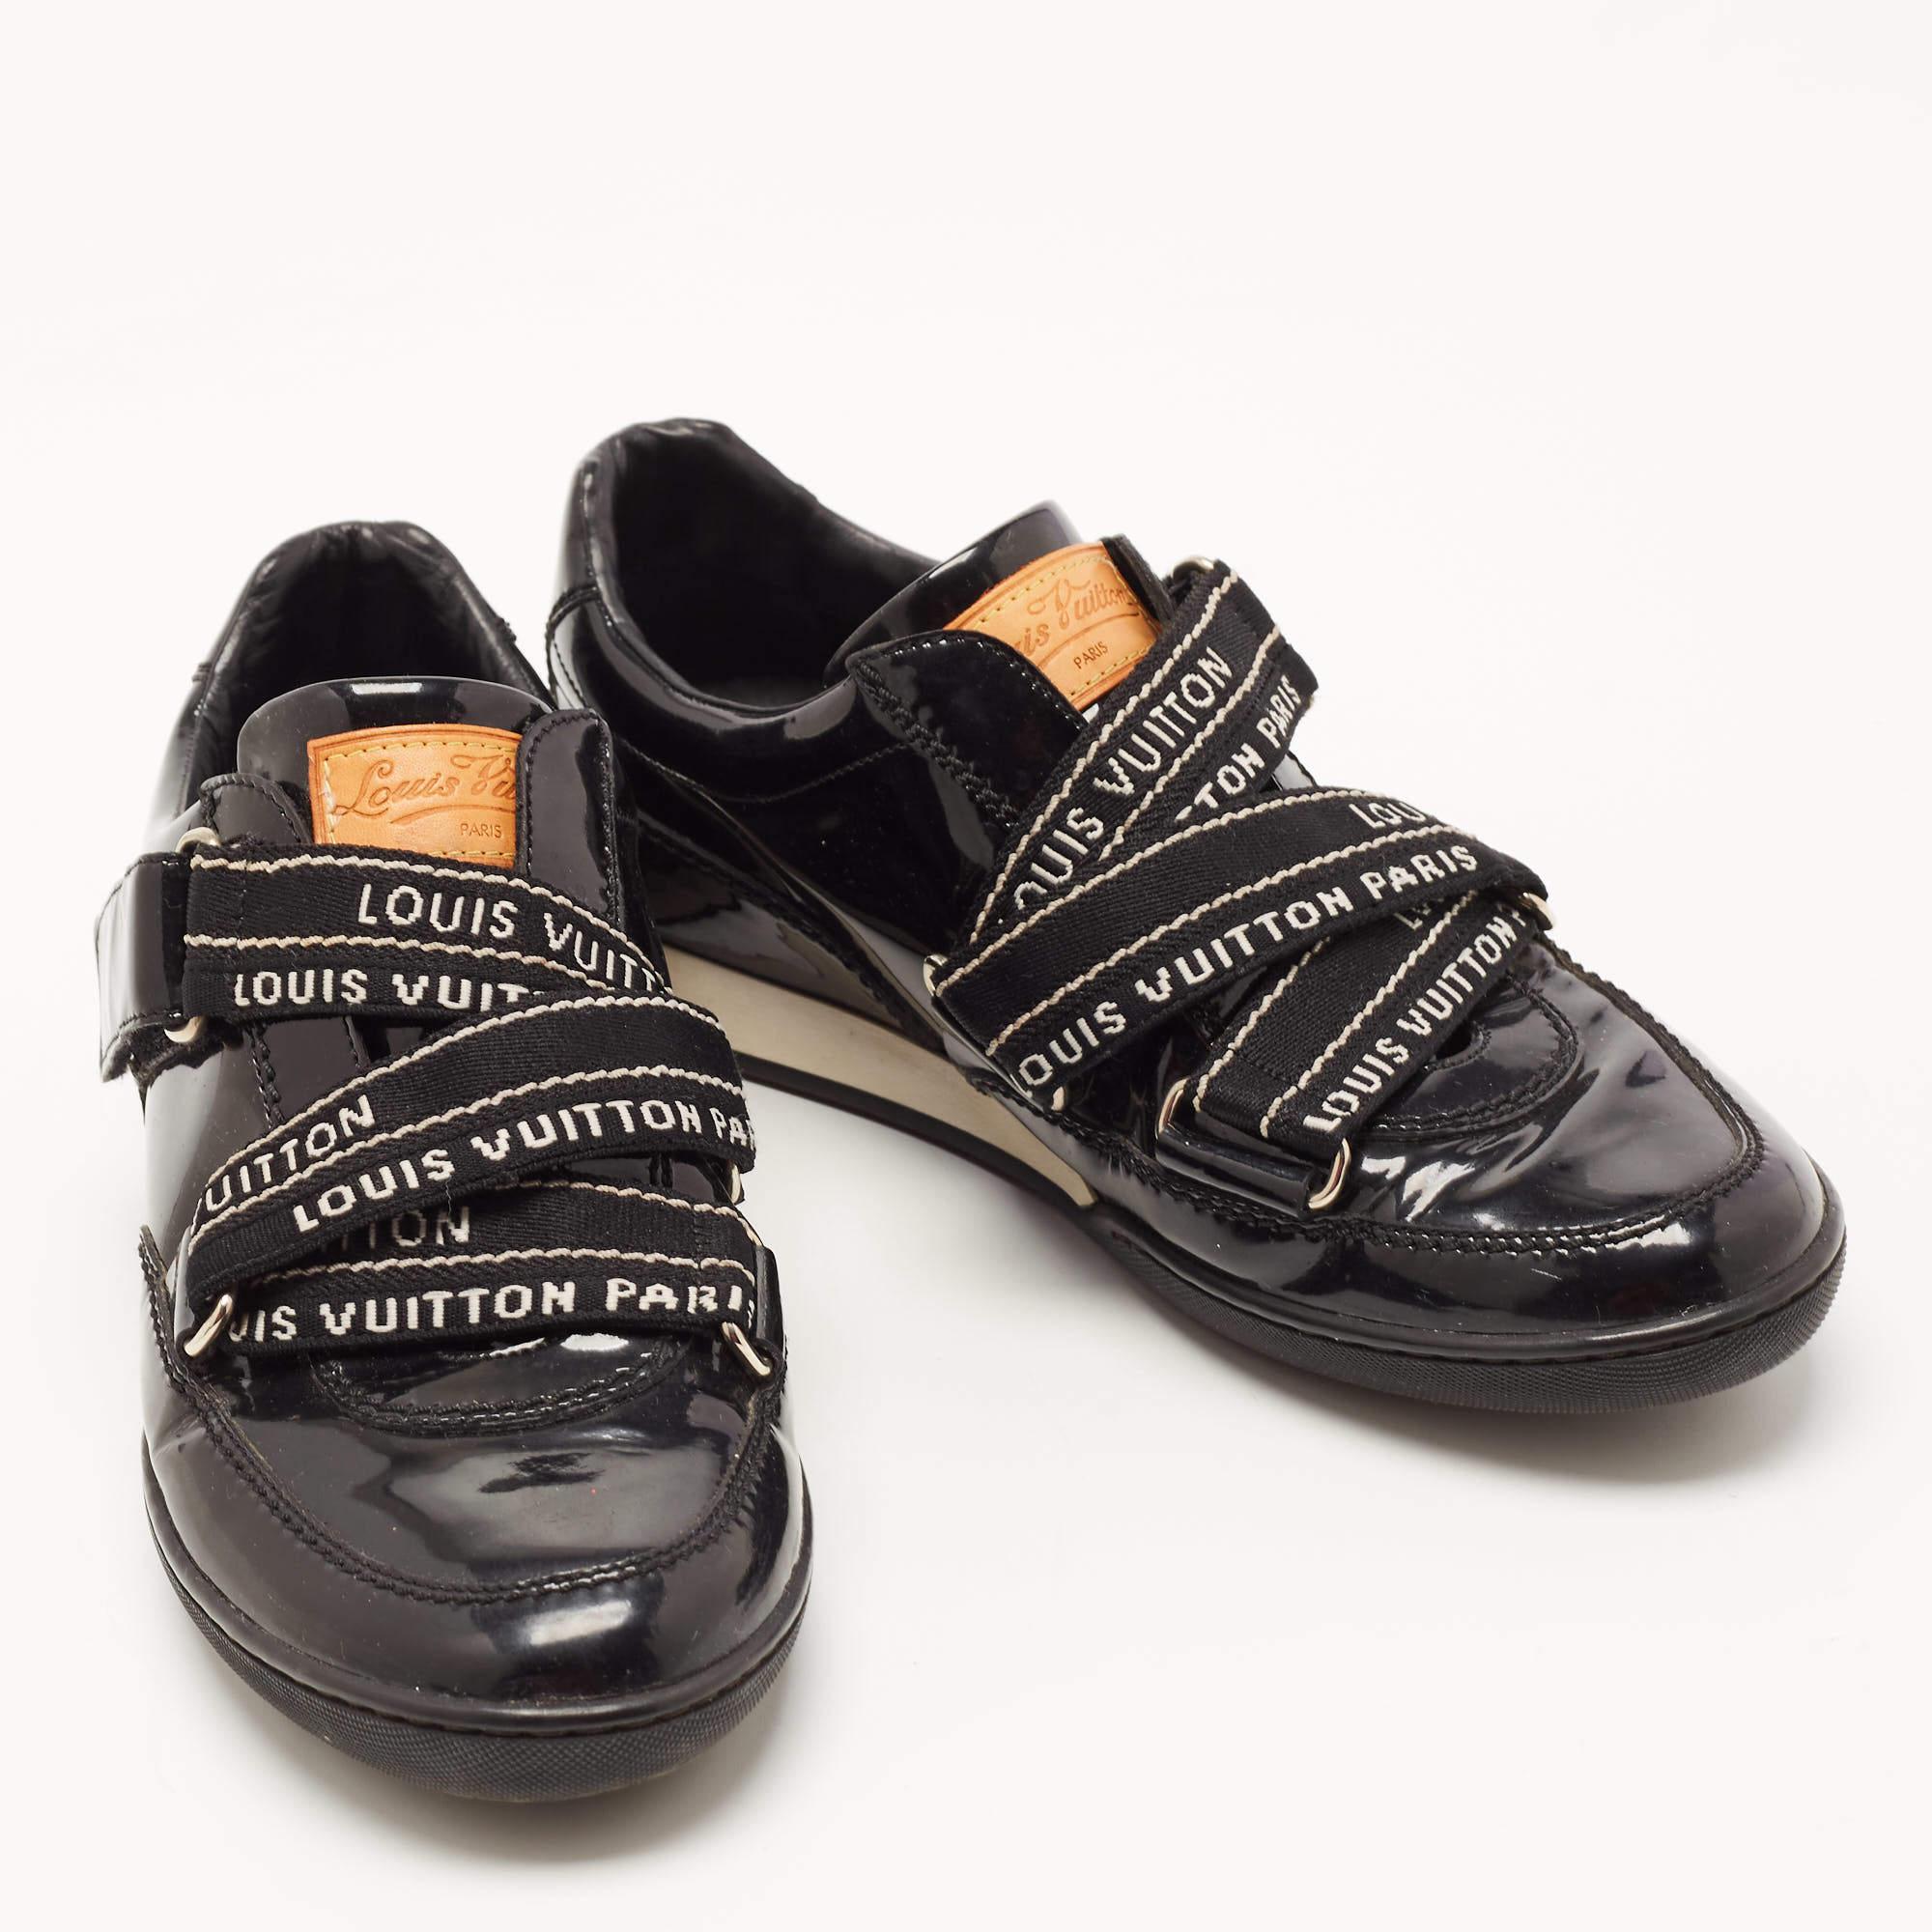 Louis Vuitton Black Patent Leather Sneakers Size 36 In Good Condition For Sale In Dubai, Al Qouz 2